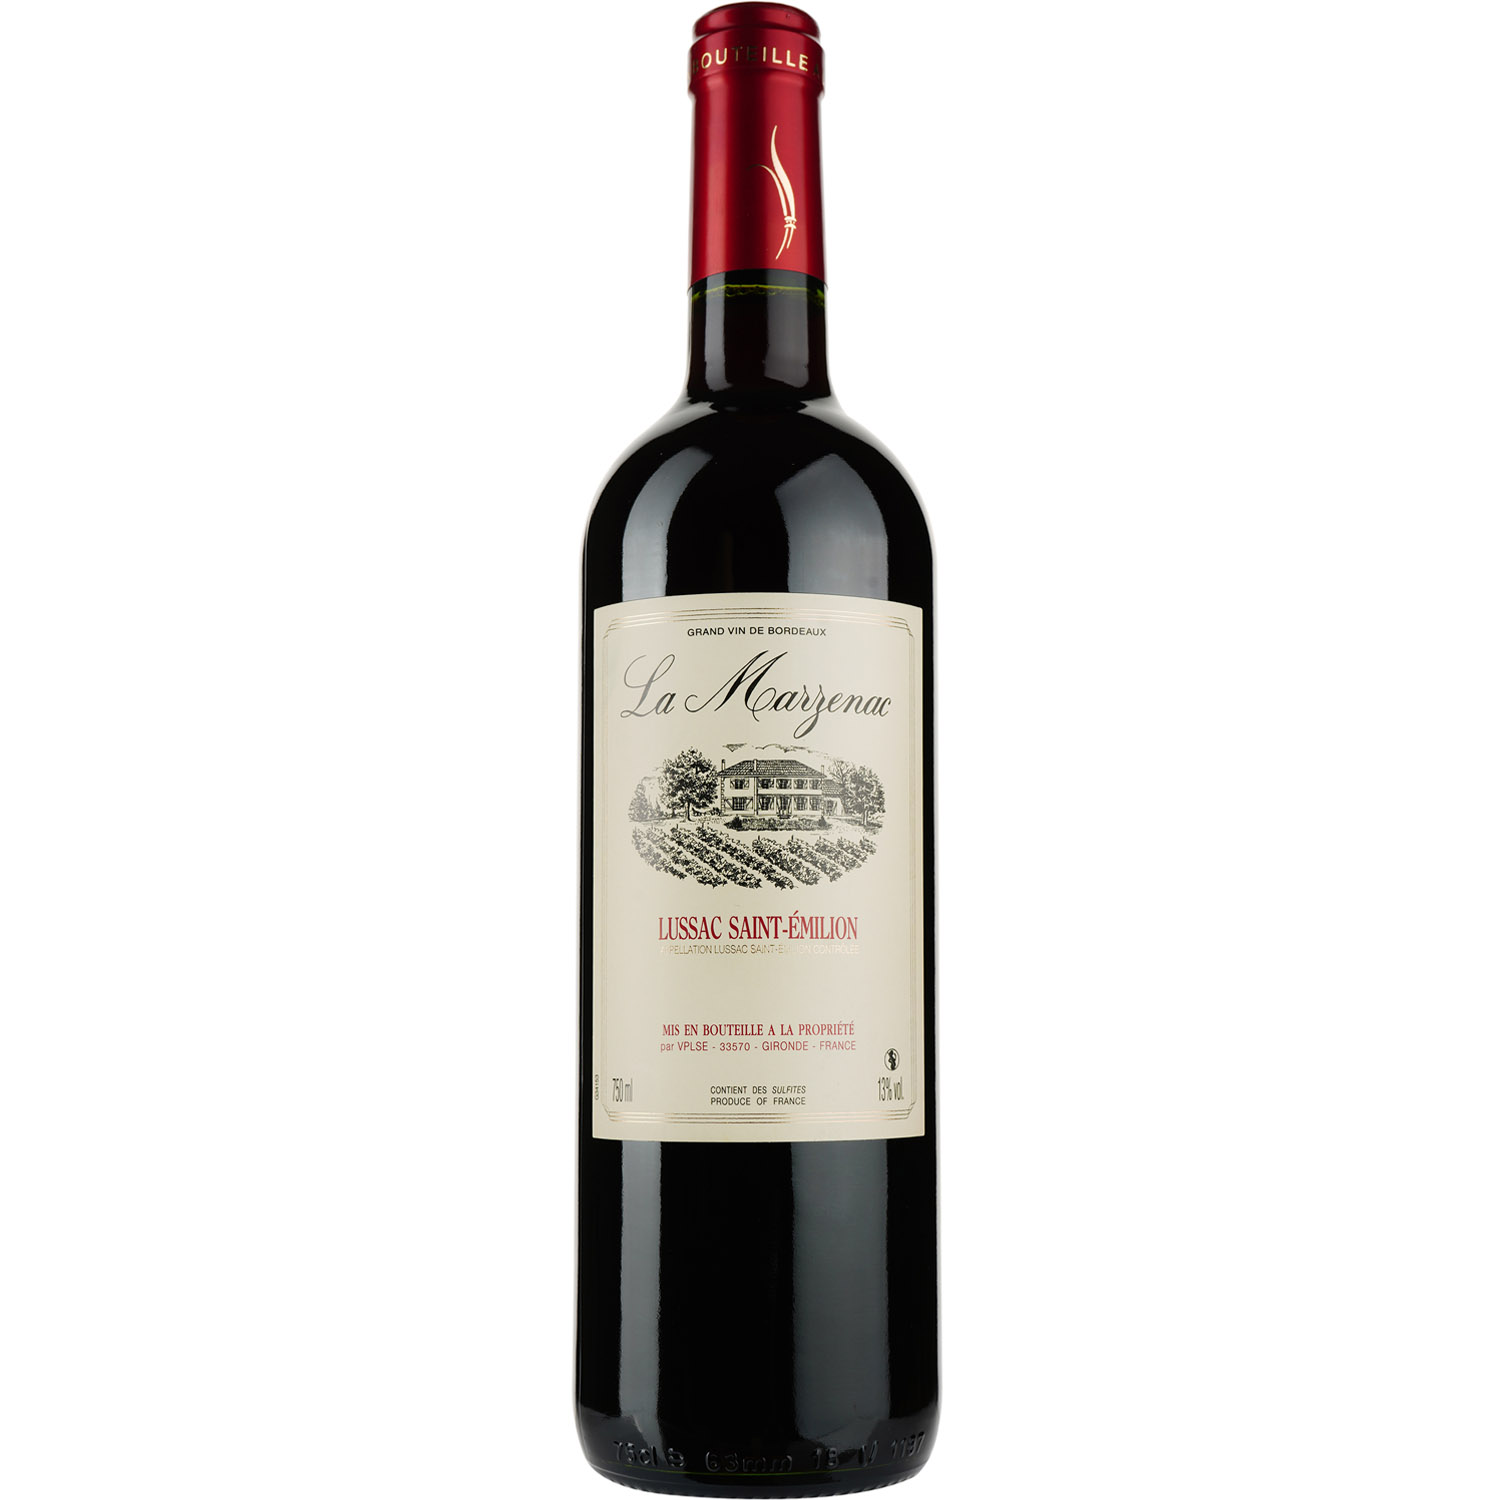 Вино La Marzenac AOP Lussac Saint Emilion 2017, червоне, сухе, 0,75 л - фото 1